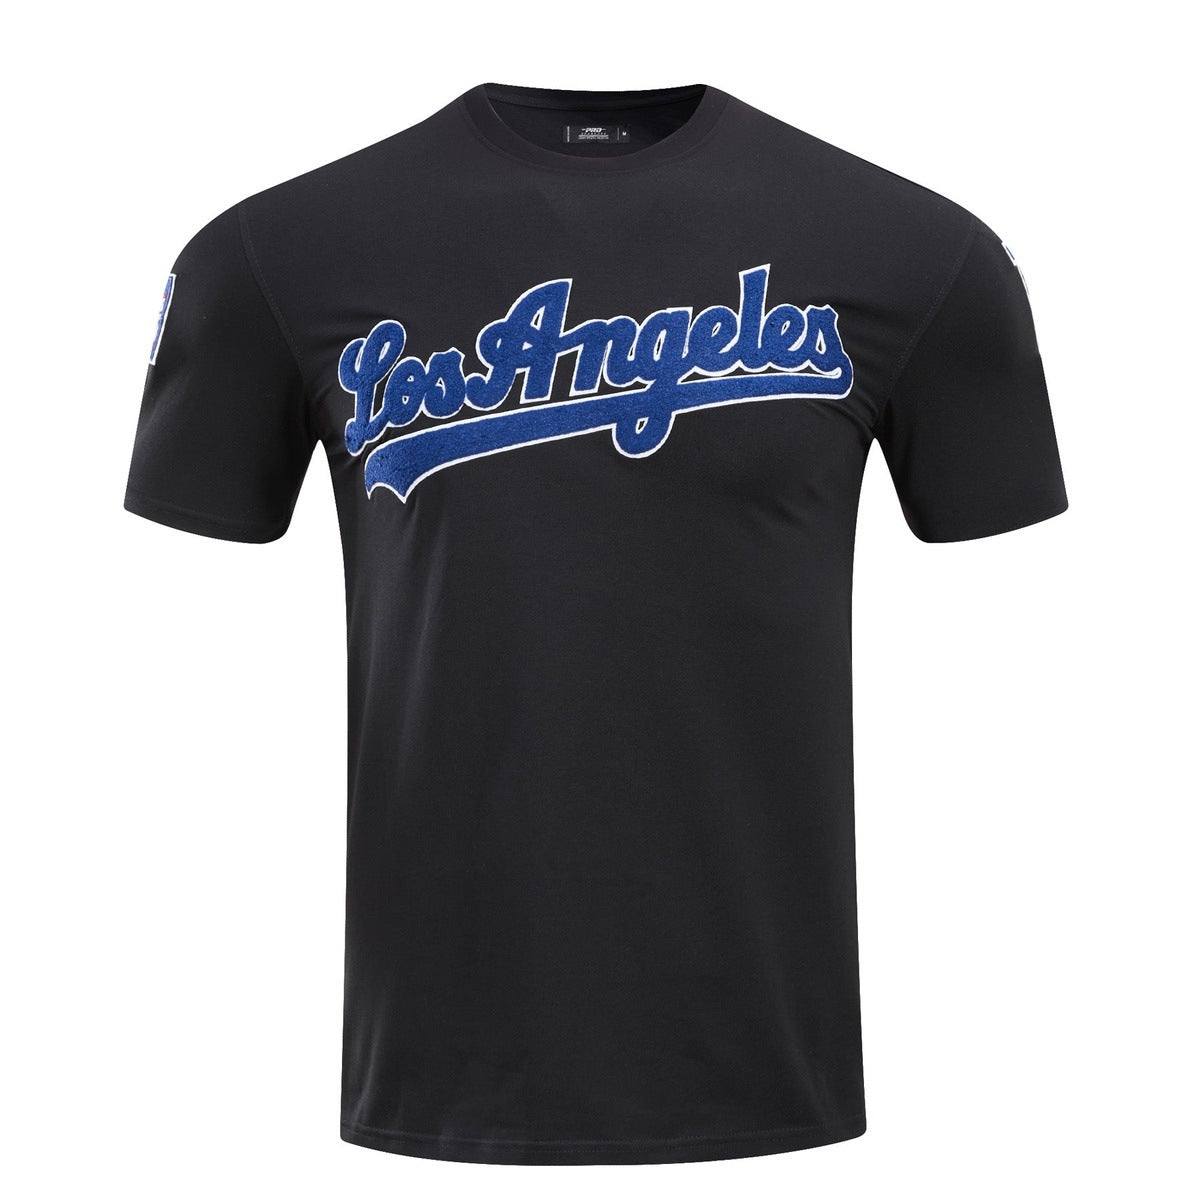 Pro Standard Men's Los Angeles Dodgers Roses T-Shirt